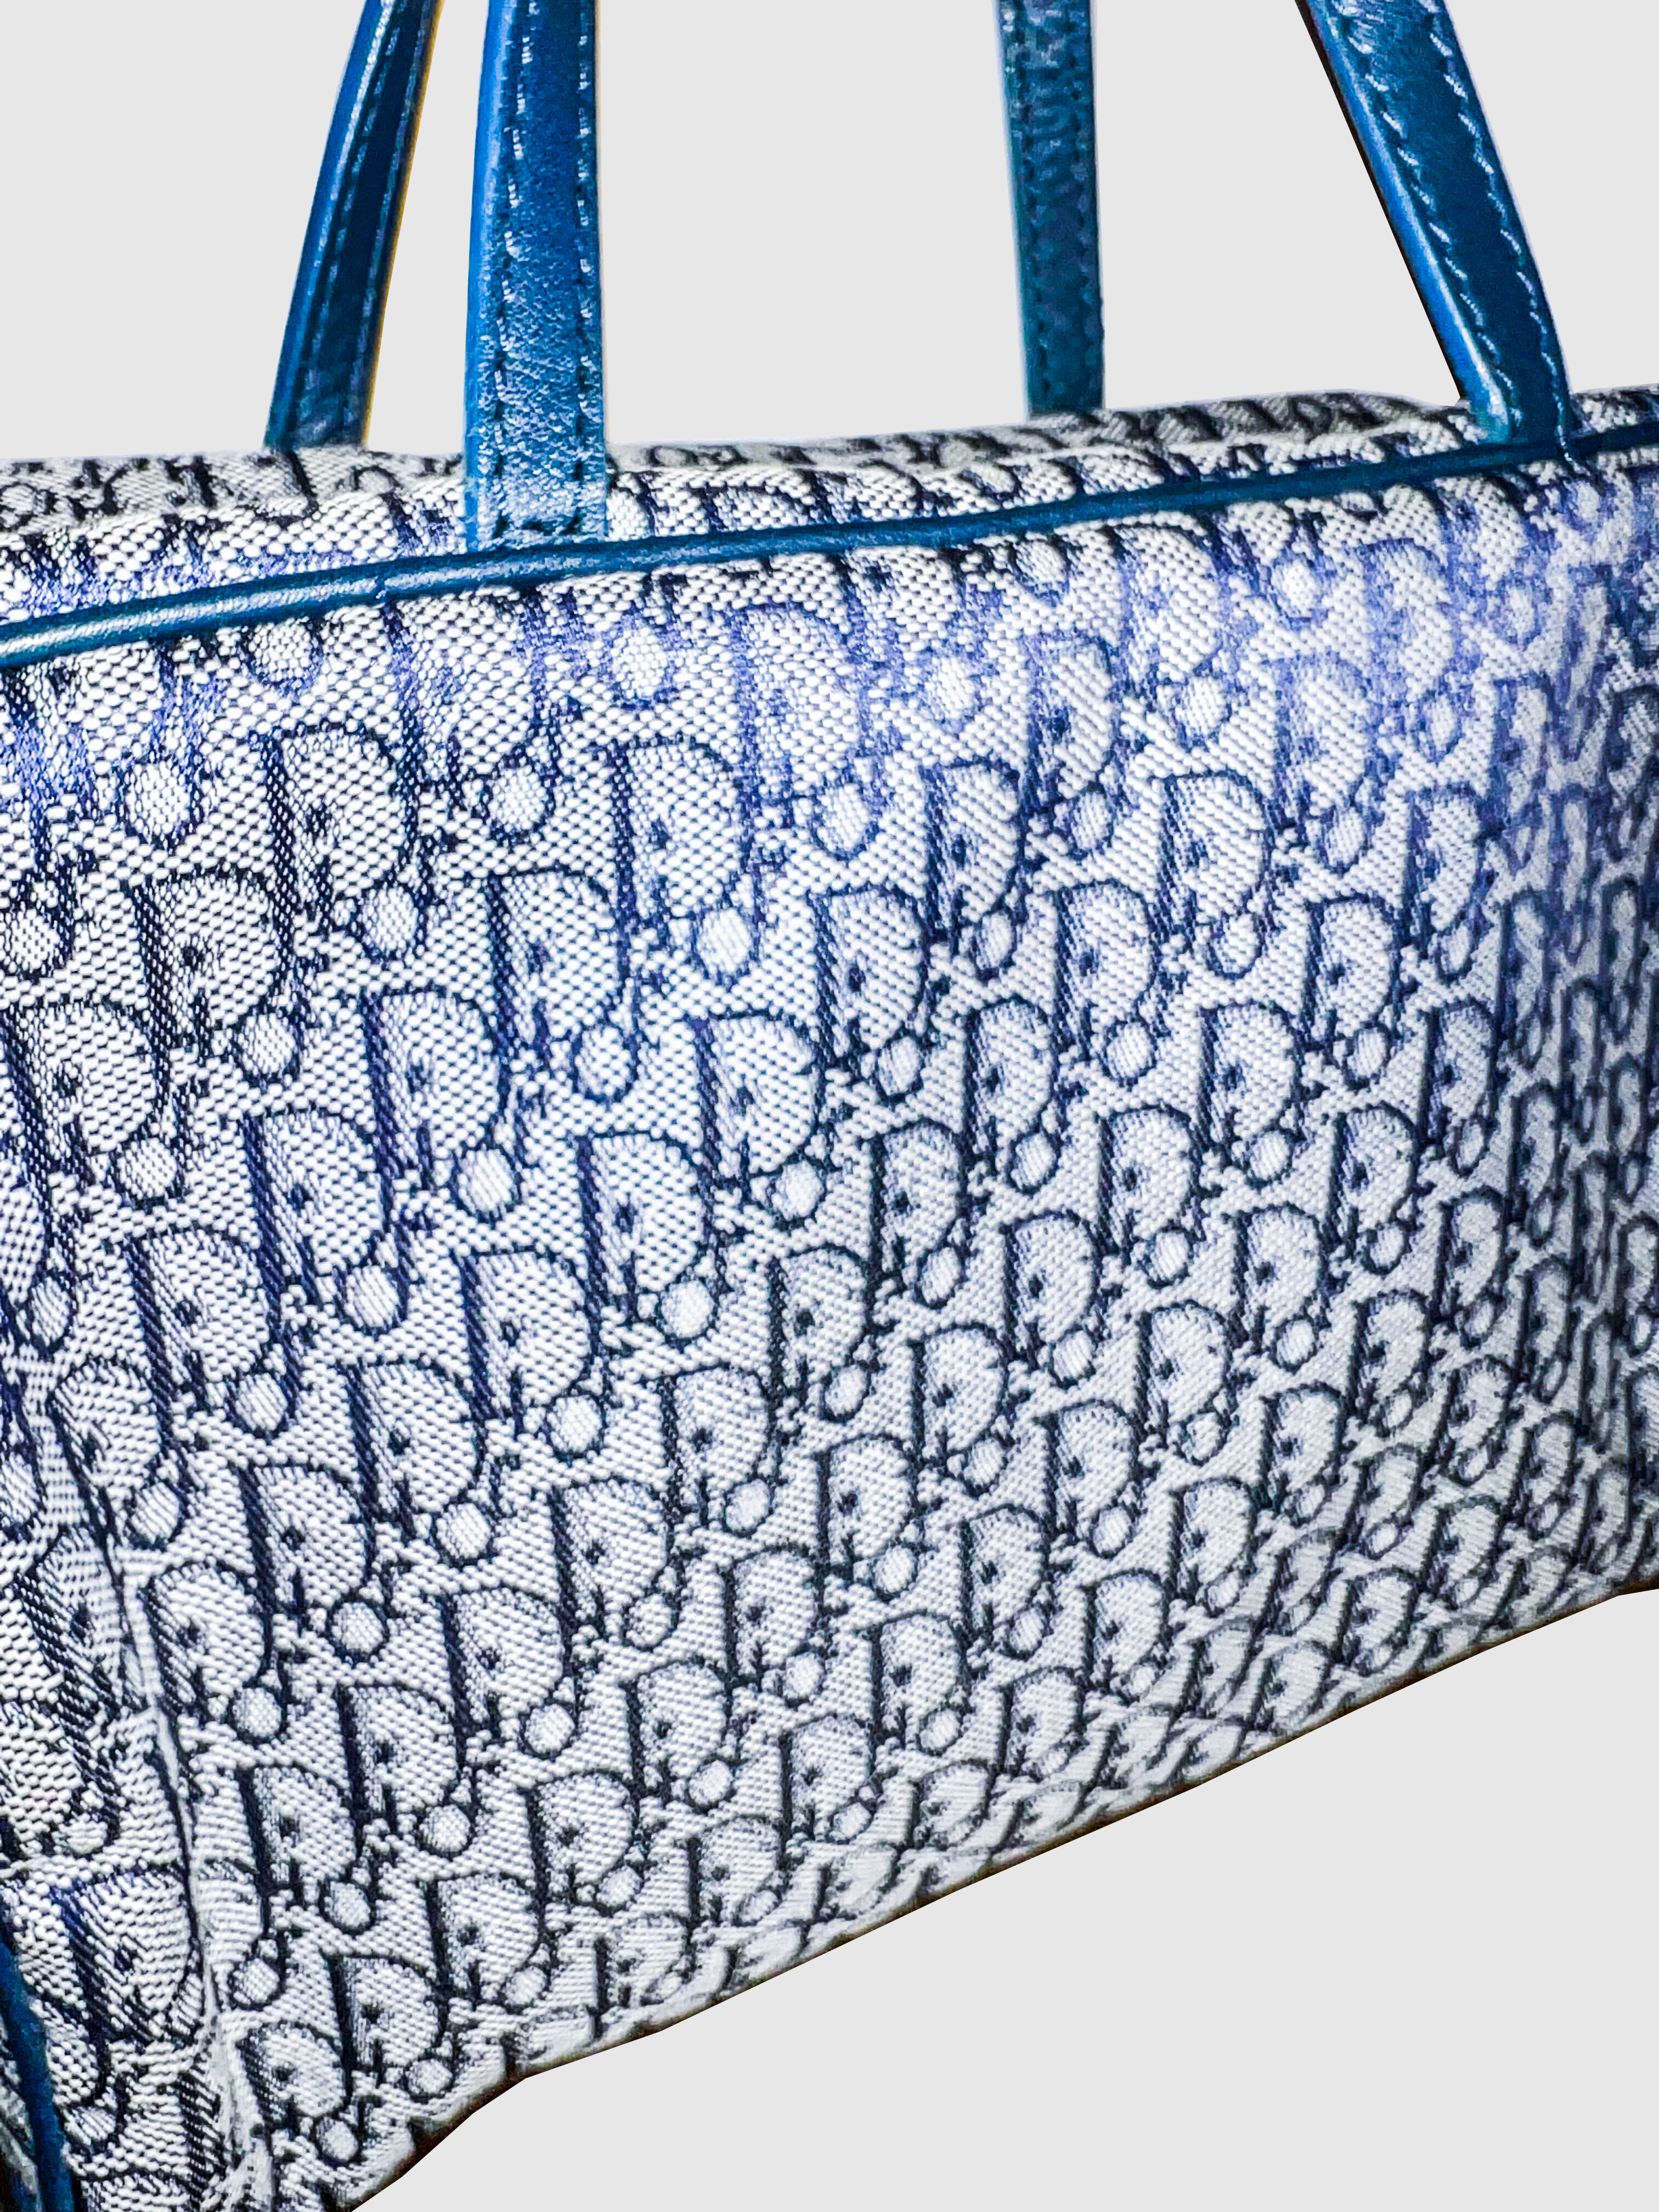 Christian Dior Diorissimo Oblique Large Navy Boston Trotter Weekender Bag